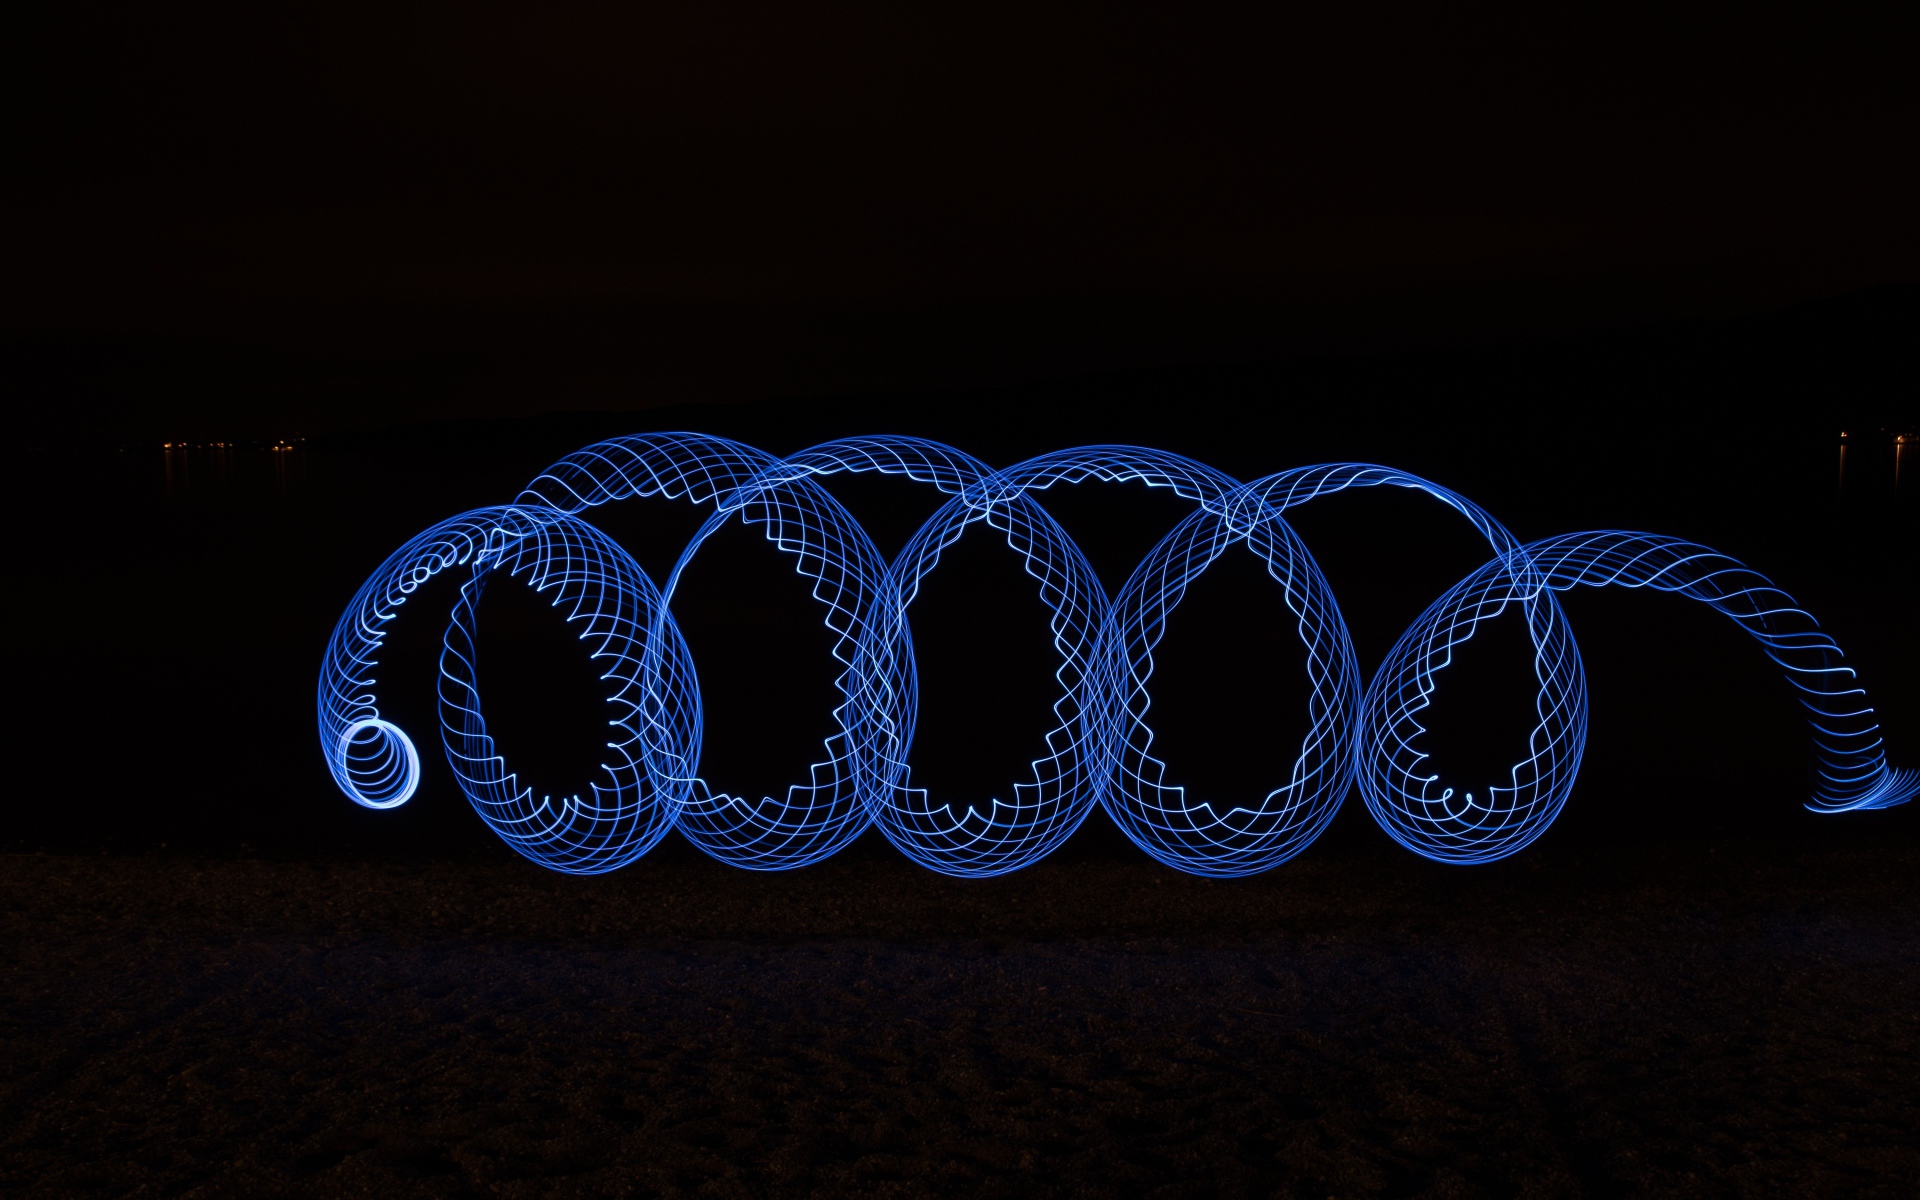 Neon spiral, 3d graphics